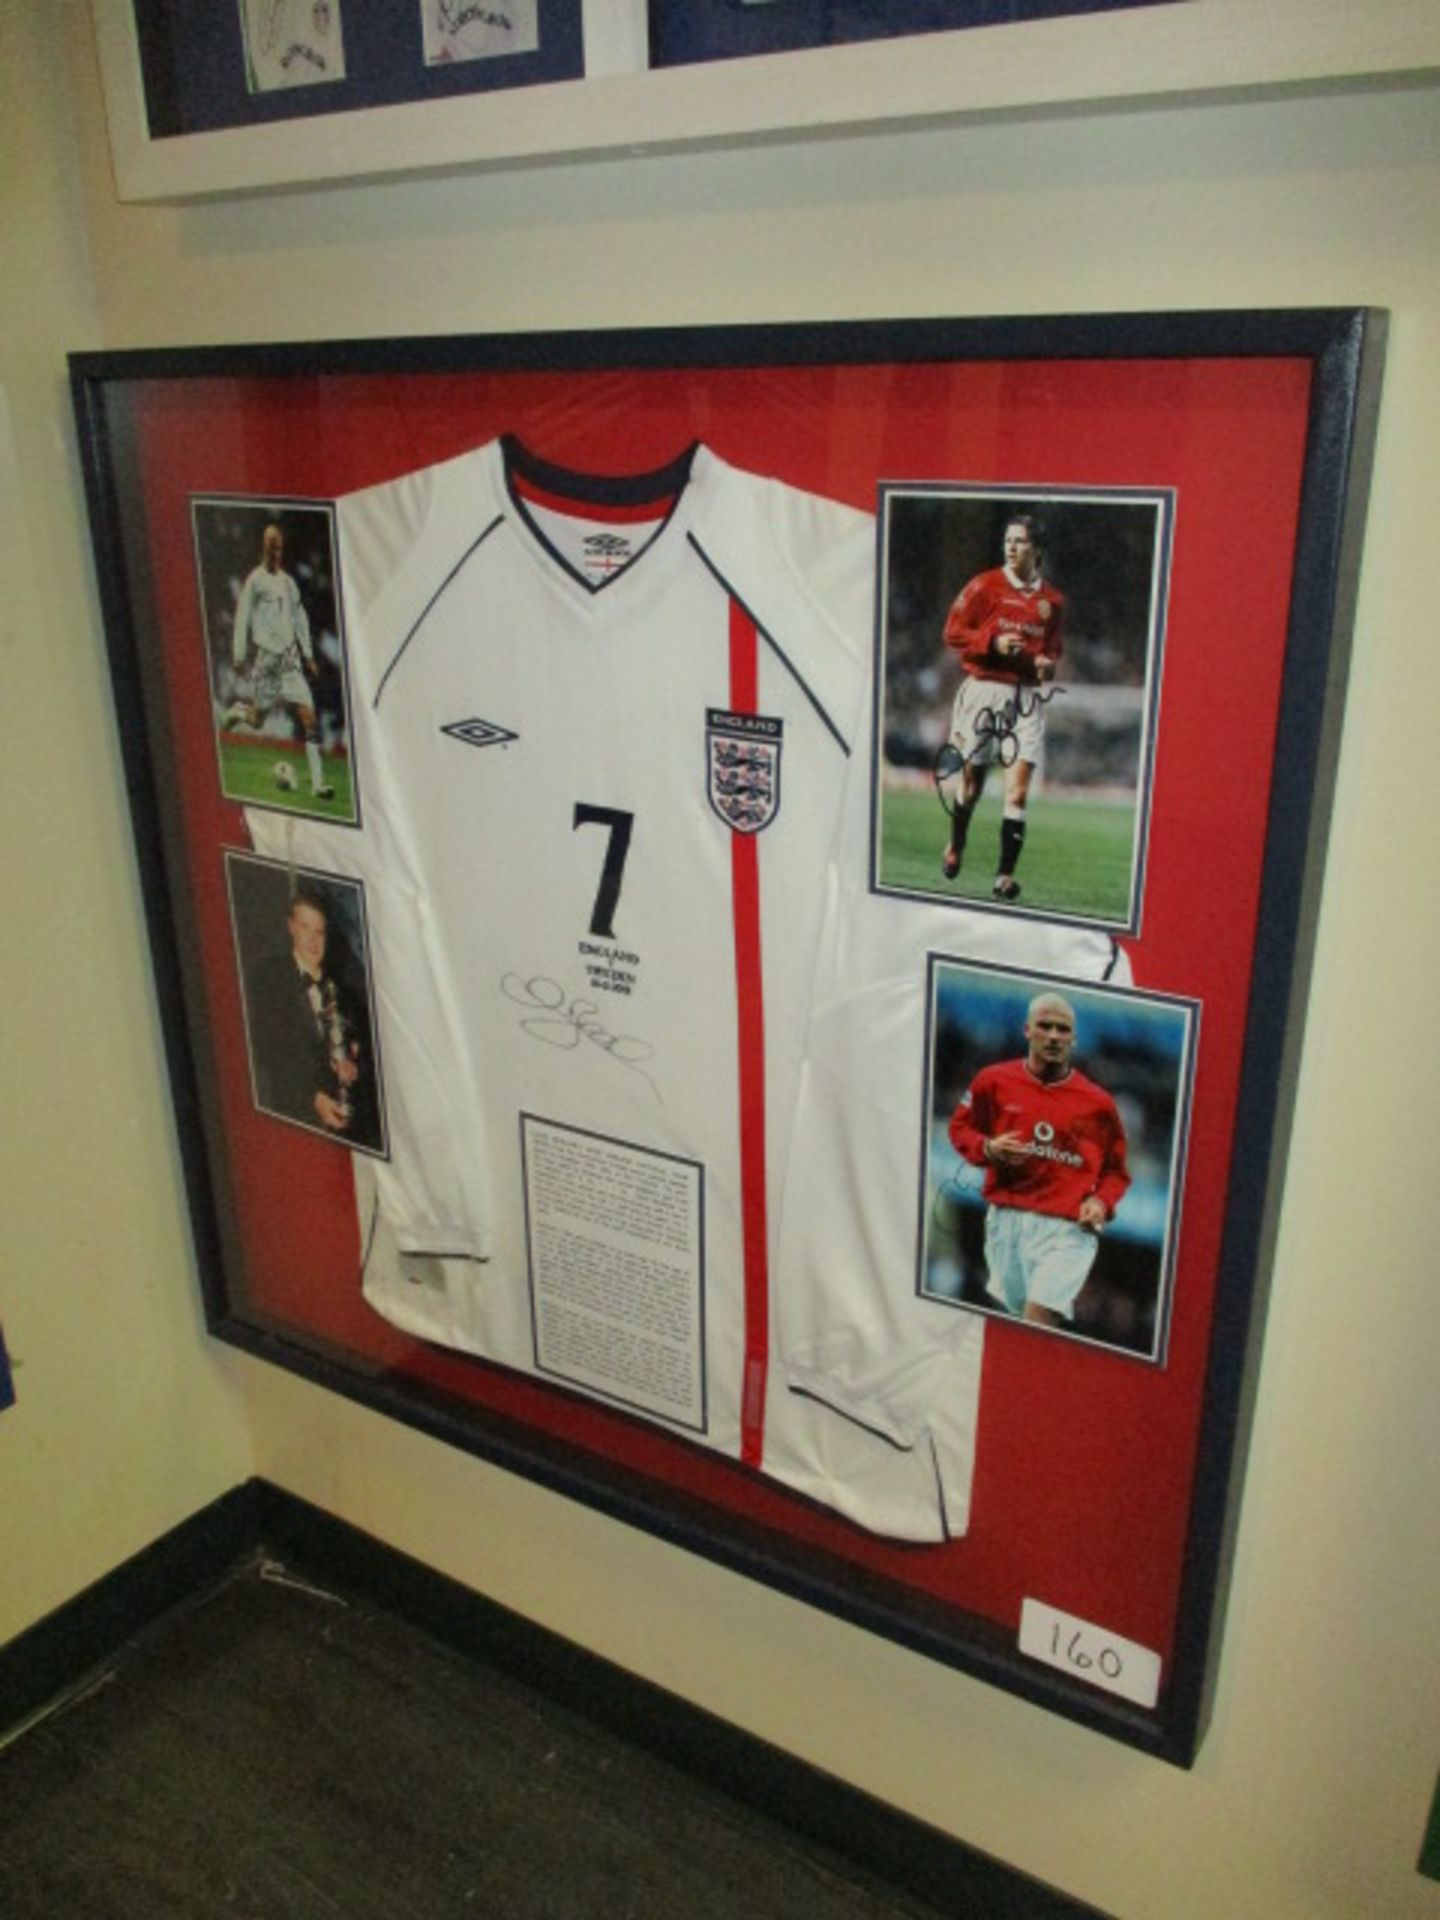 David Beckham's signed spare England National Team jersey from International Friendly match